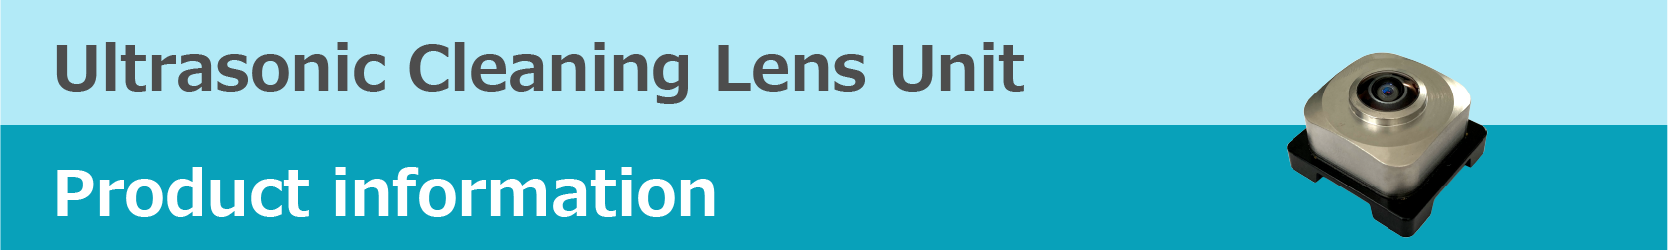 Ultrasonic Cleaning Lens Unit flyer